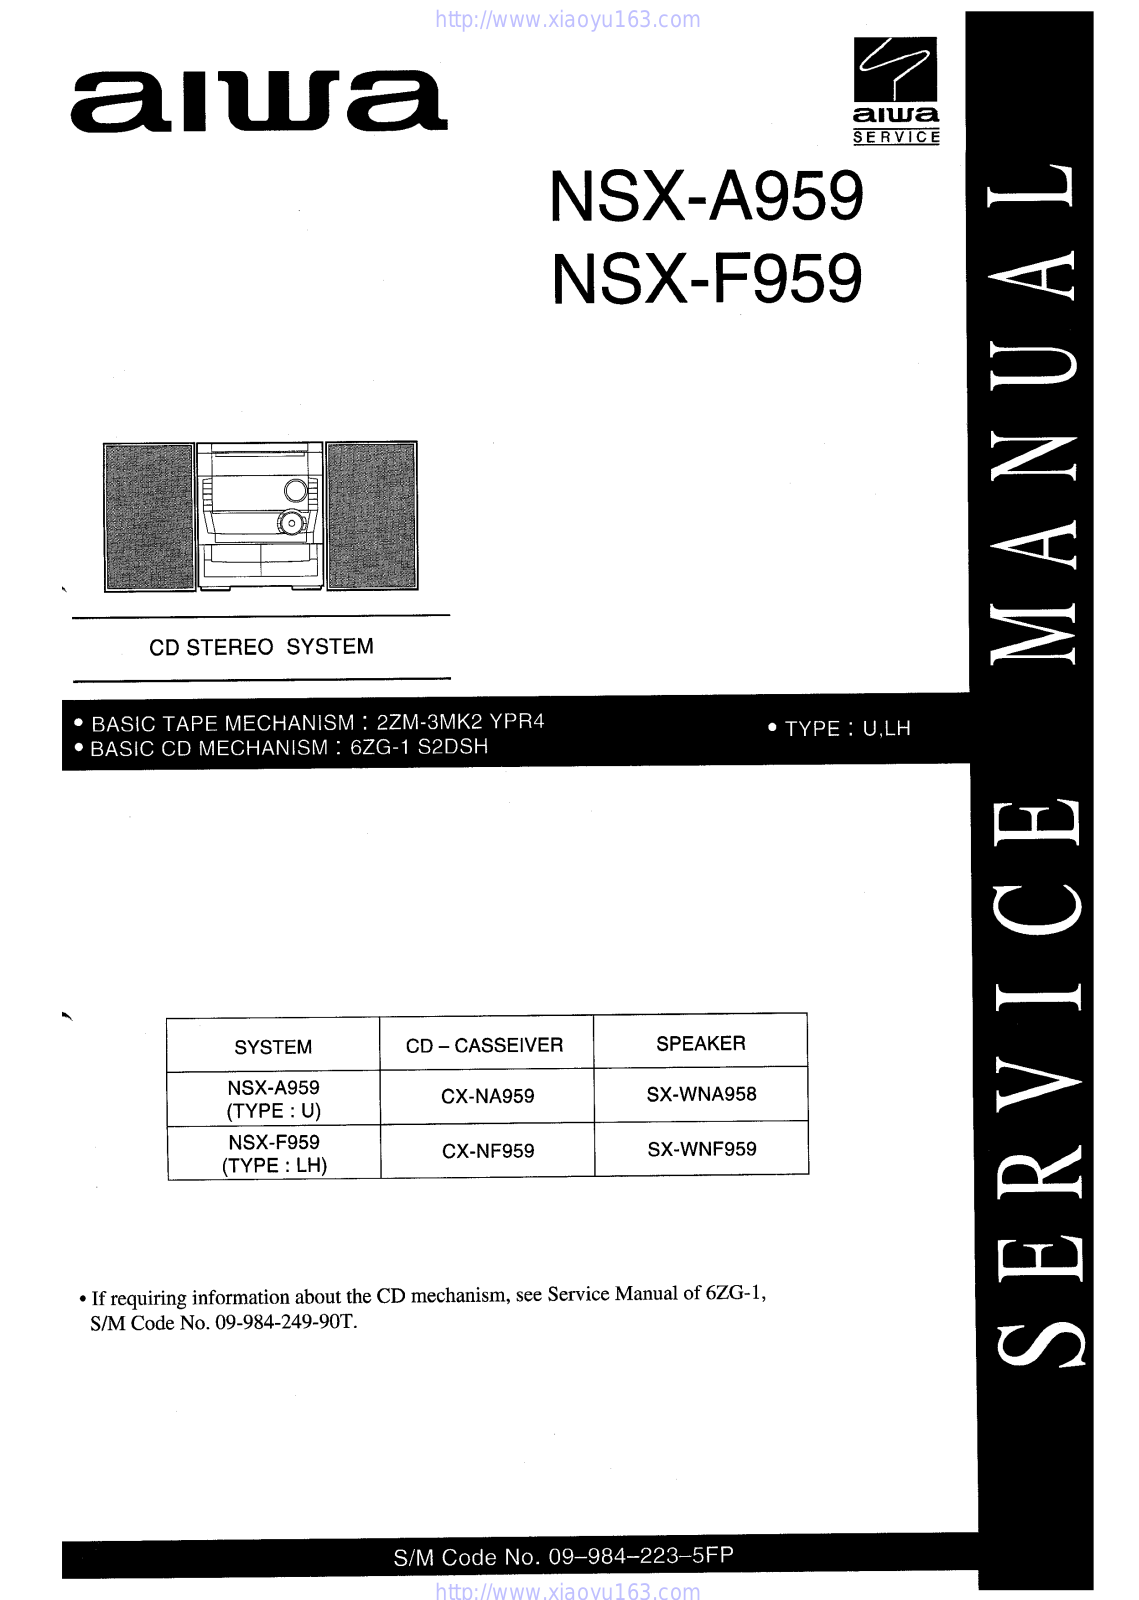 AIWA NSX-F959 User Manual